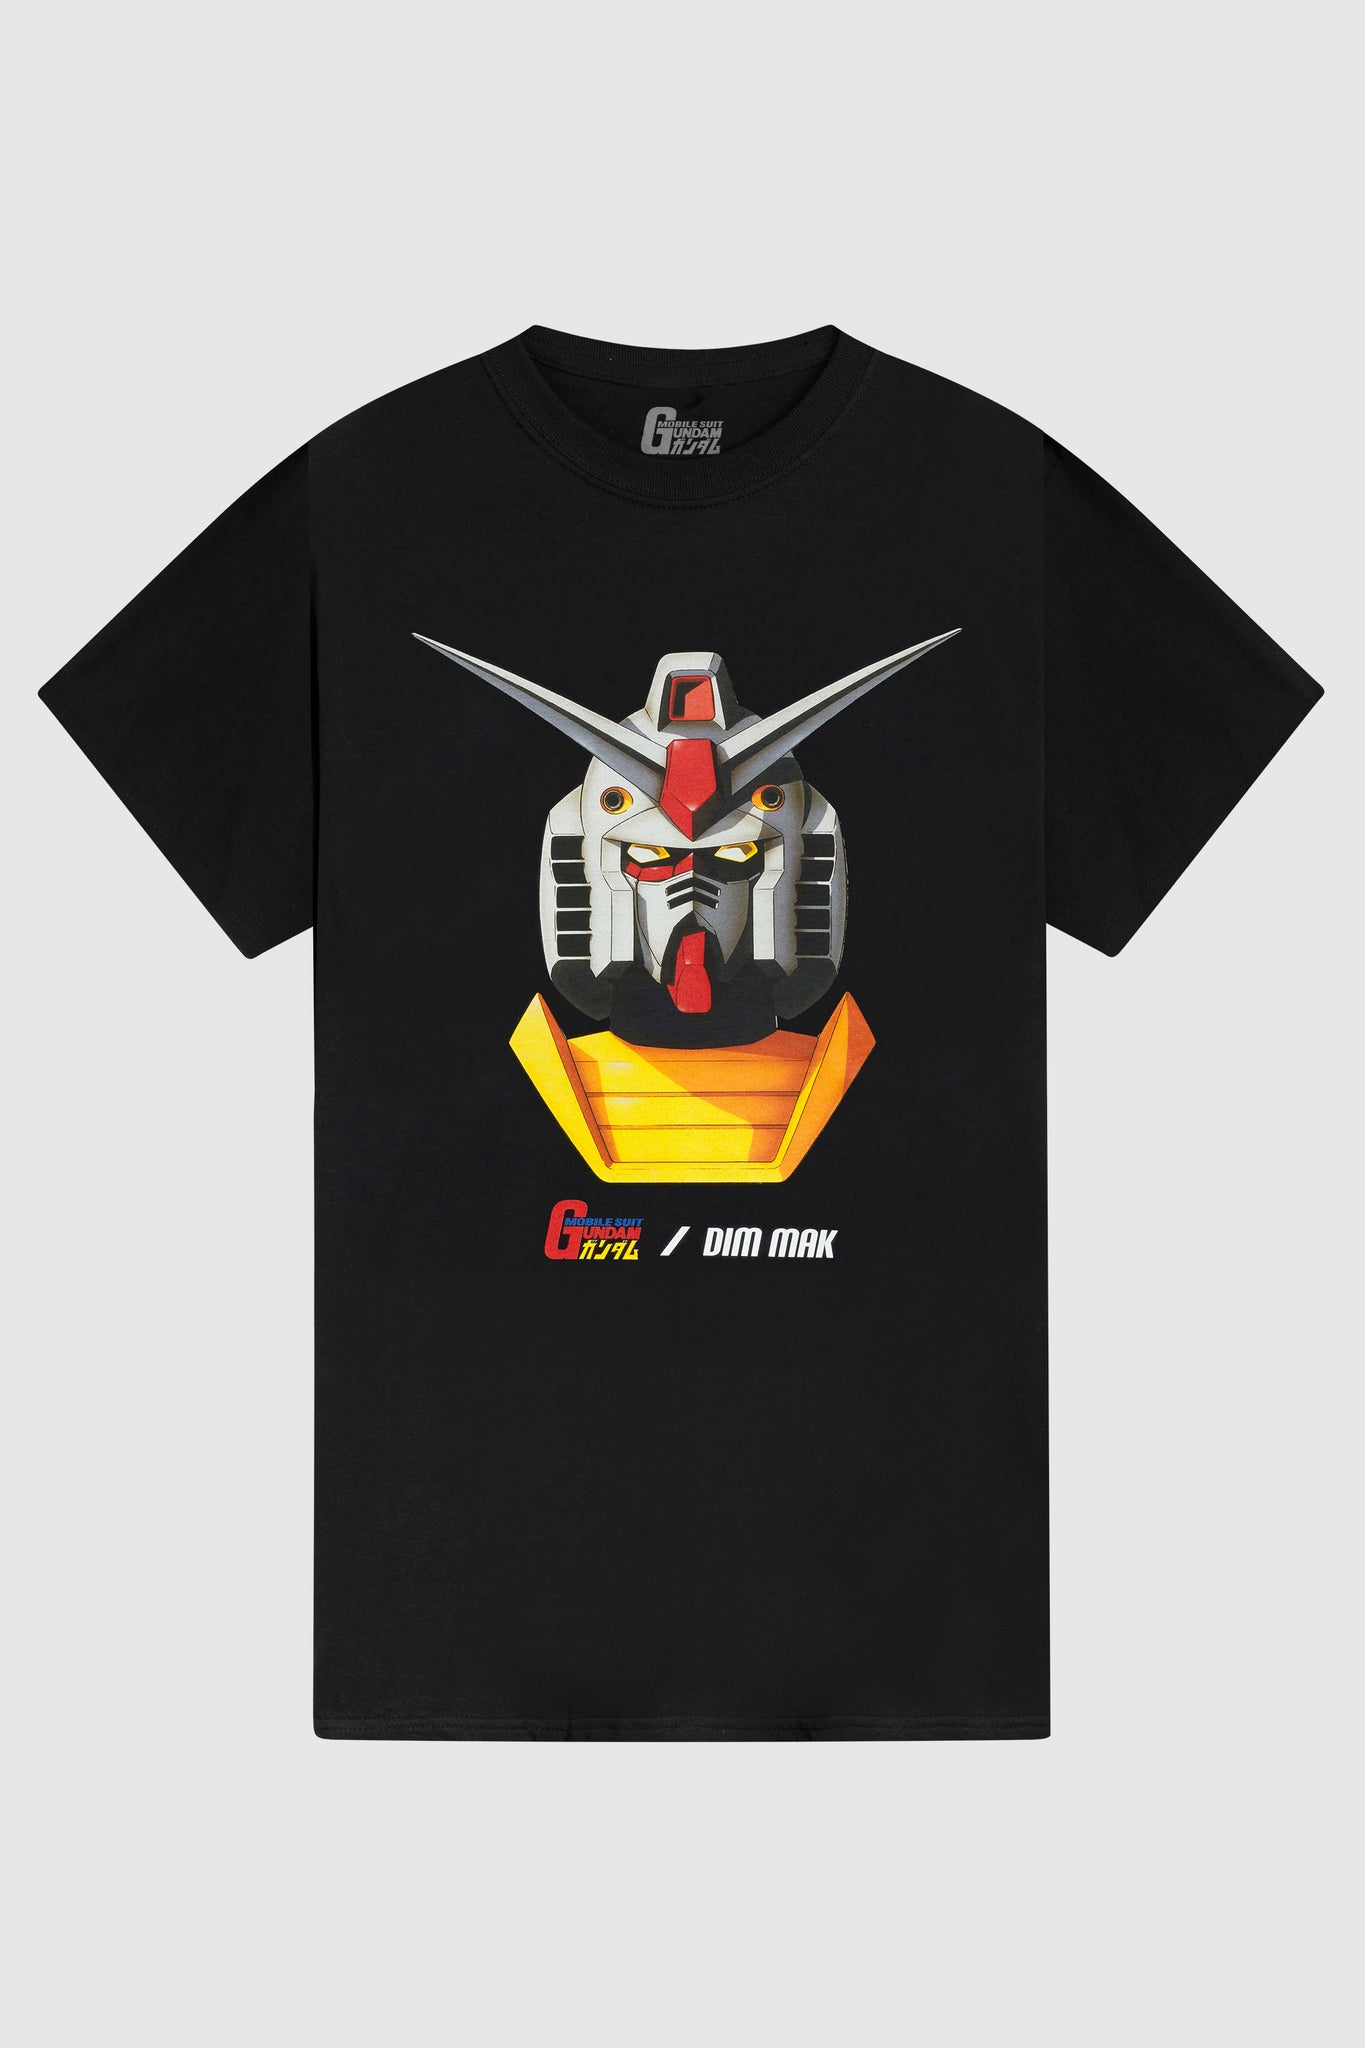 Dim Mak x Gundam Mobile Suit - Gundam Tee - Black